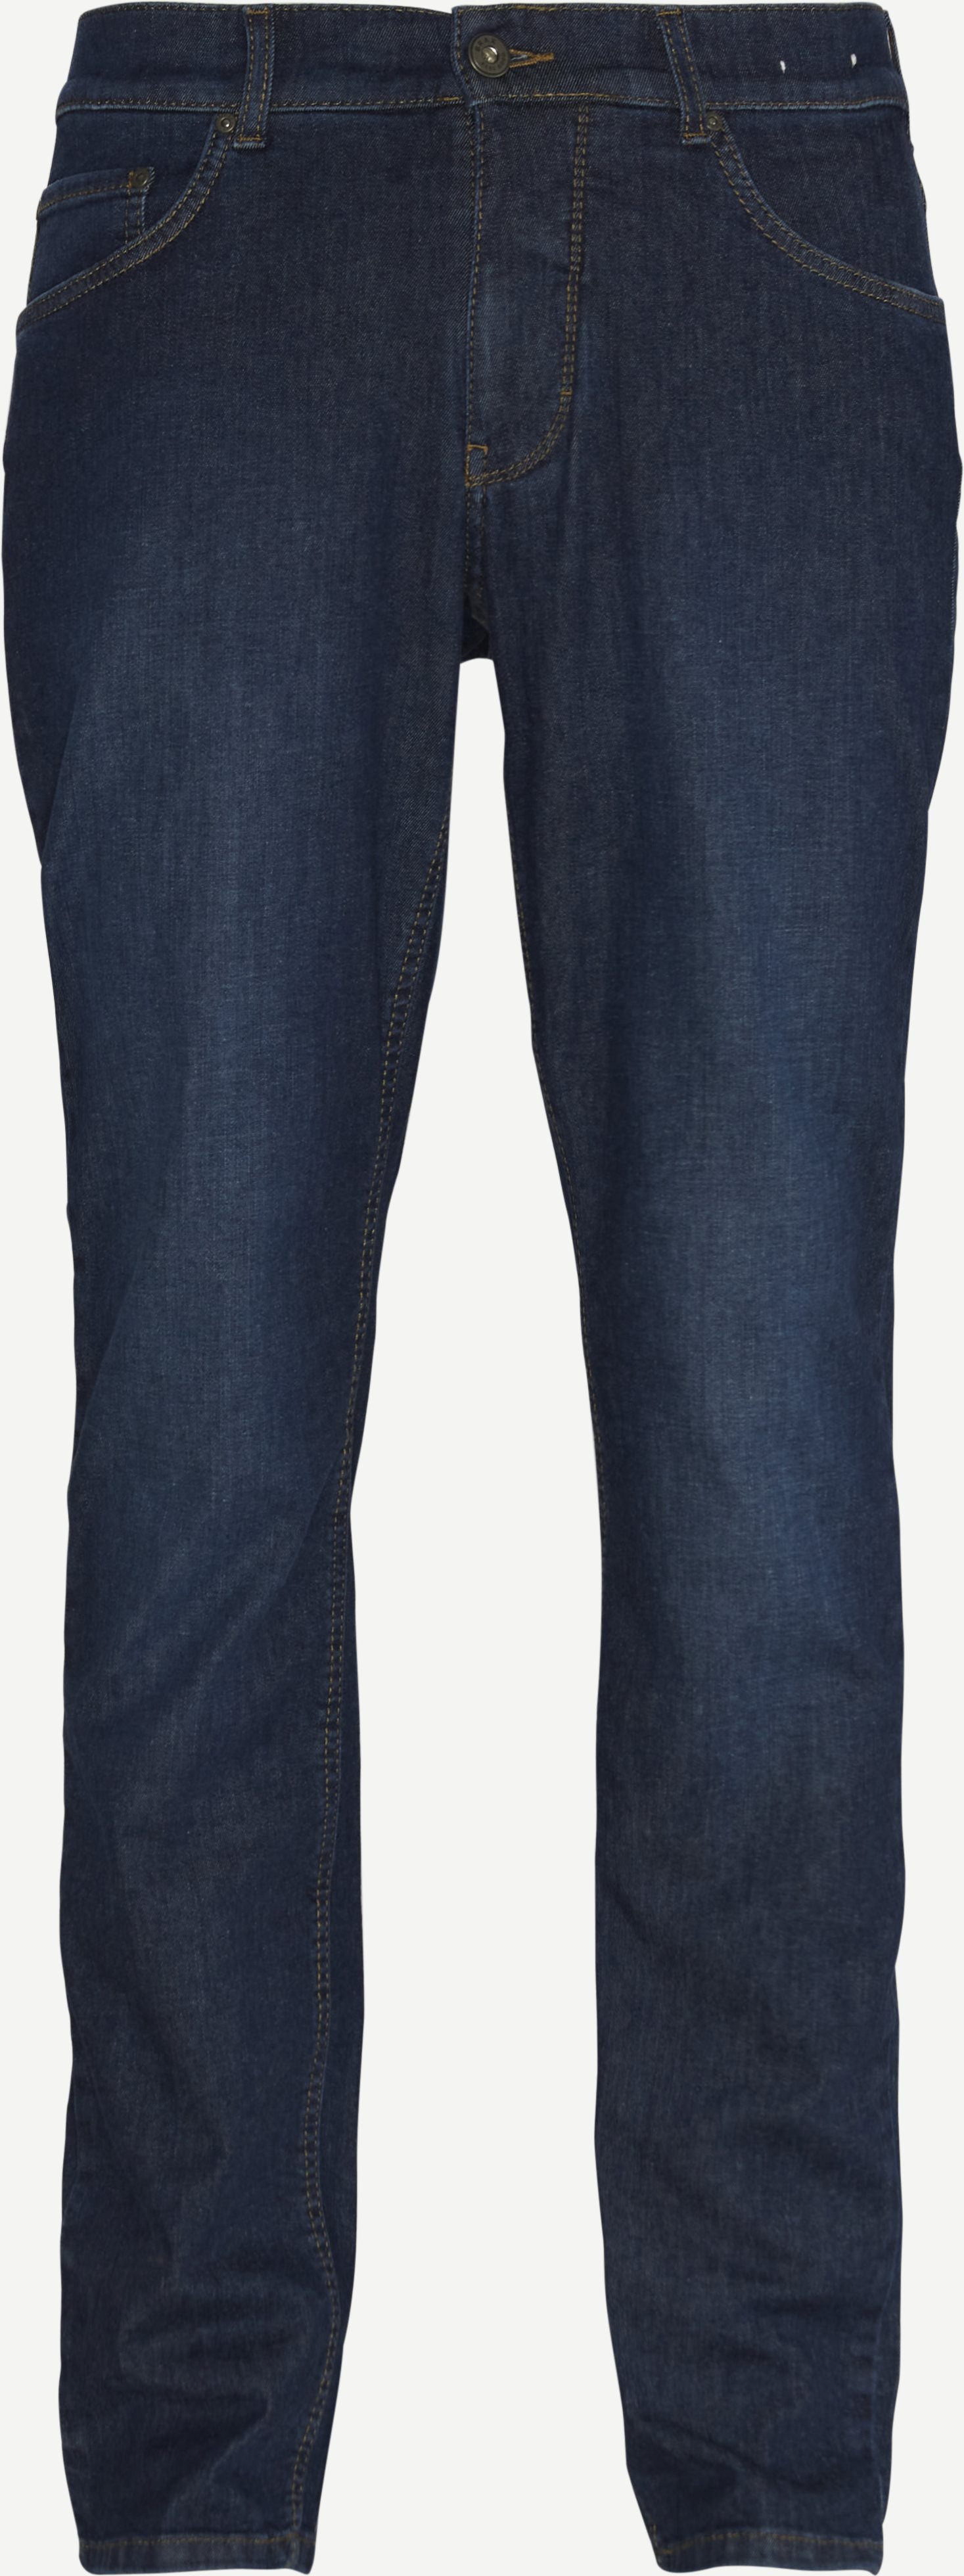 Cooper-Jeans - Jeans - Regular fit - Jeans-Blau